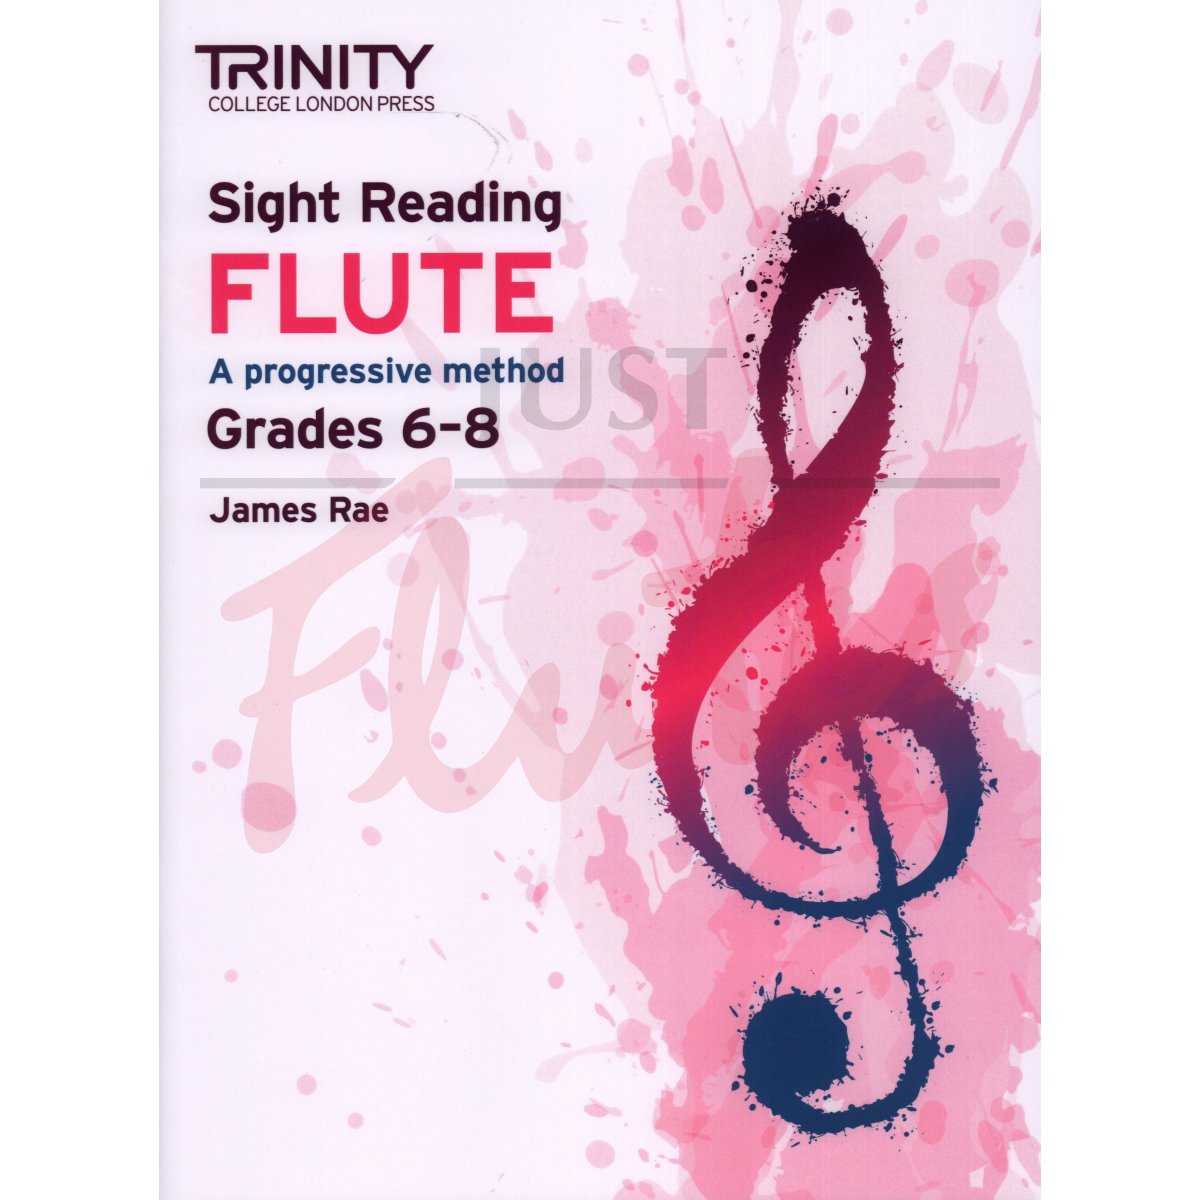 Sight Reading Flute: A Progressive Method, Grades 6-8